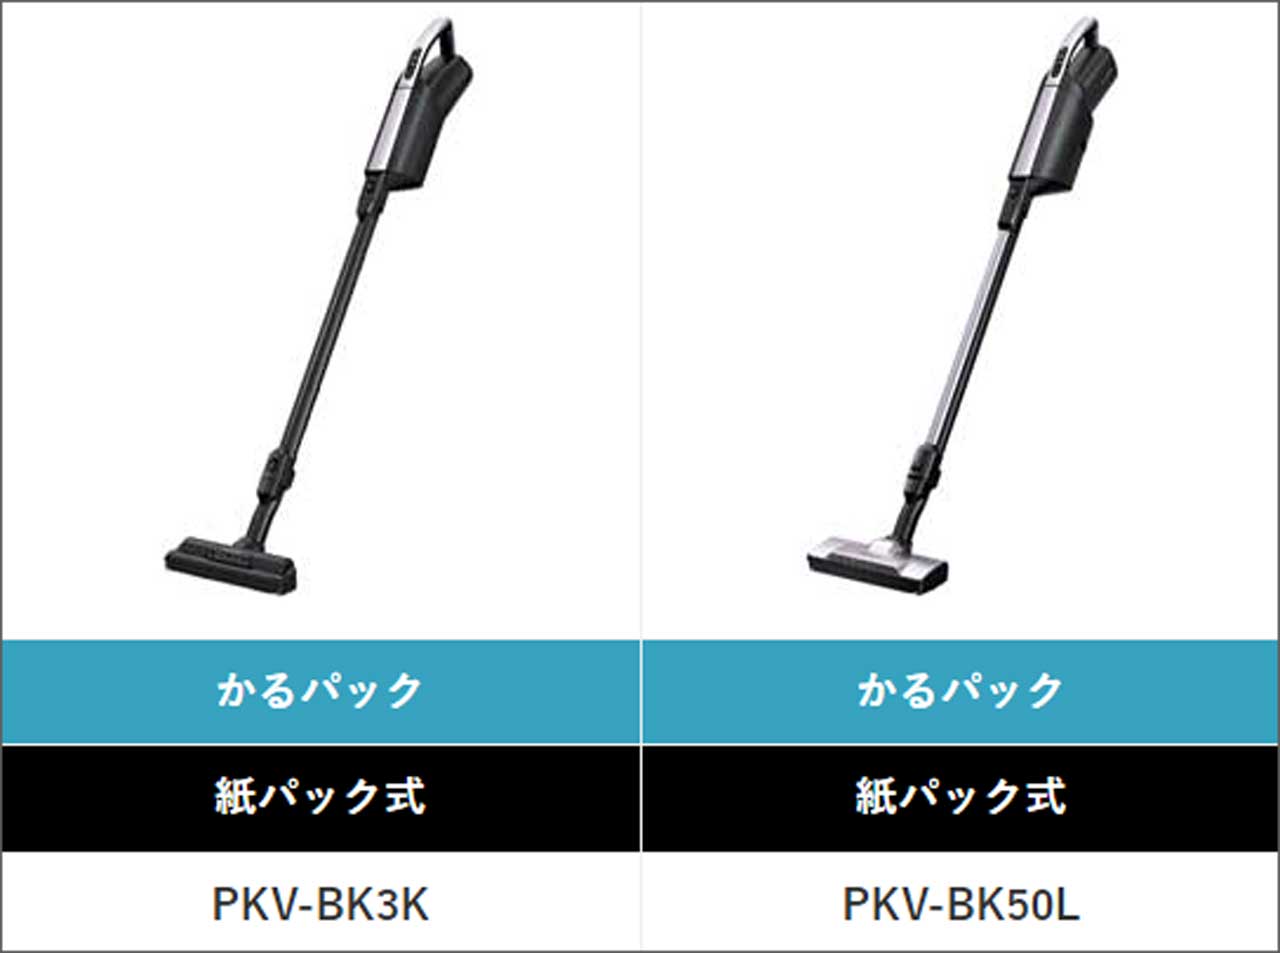 PKV-BK3KとPKV-BK50Lのスペックや付属品の違い